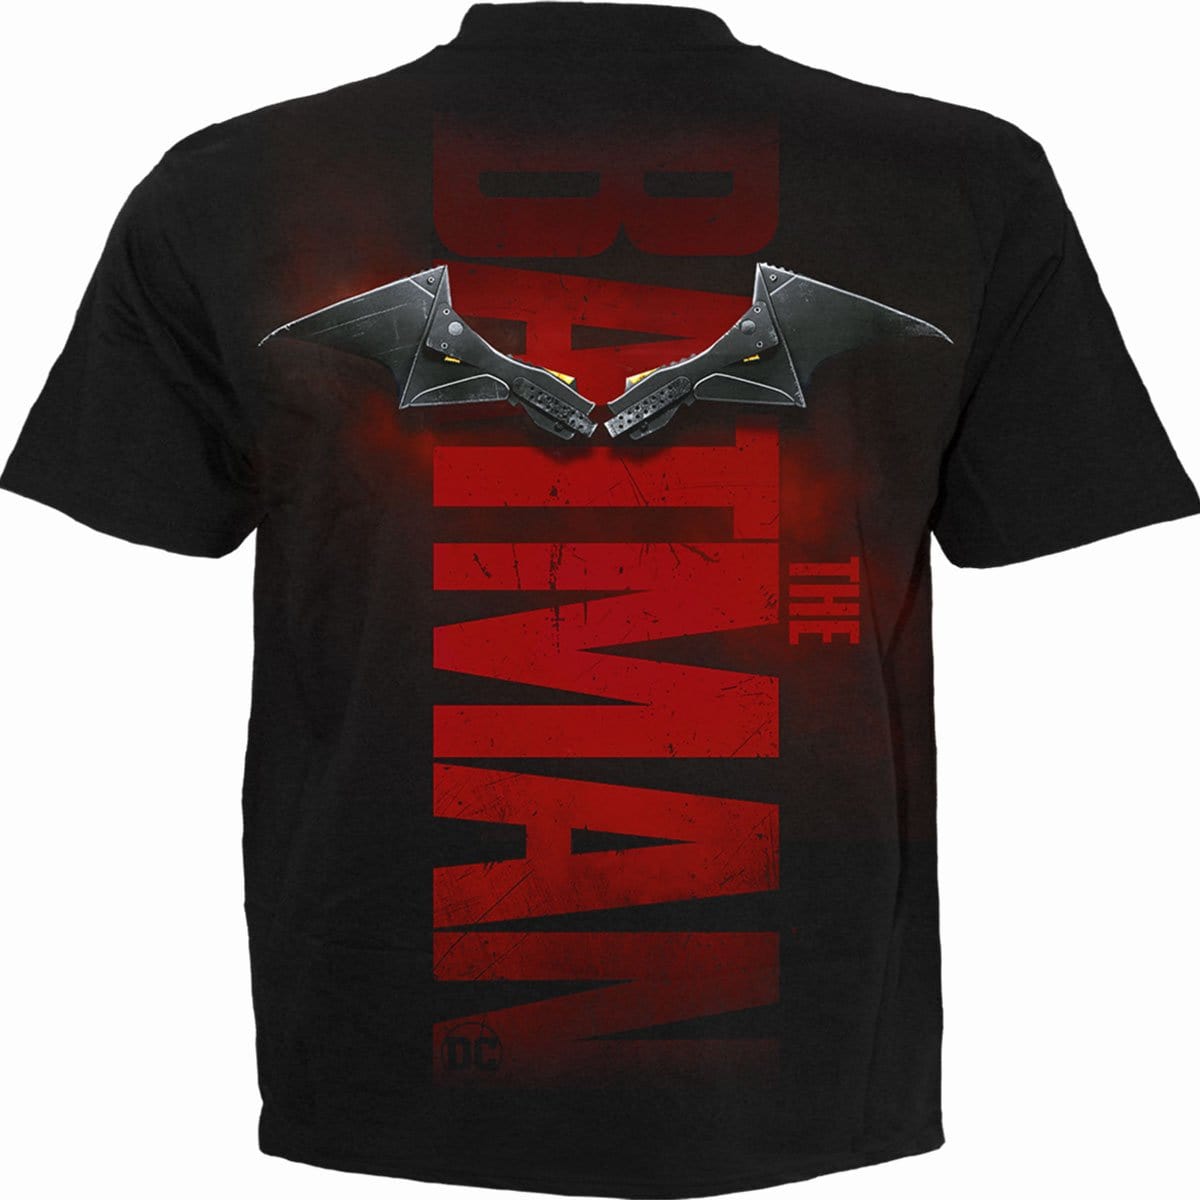 THE BATMAN - RED SHADOWS - T-Shirt Black - Spiral USA